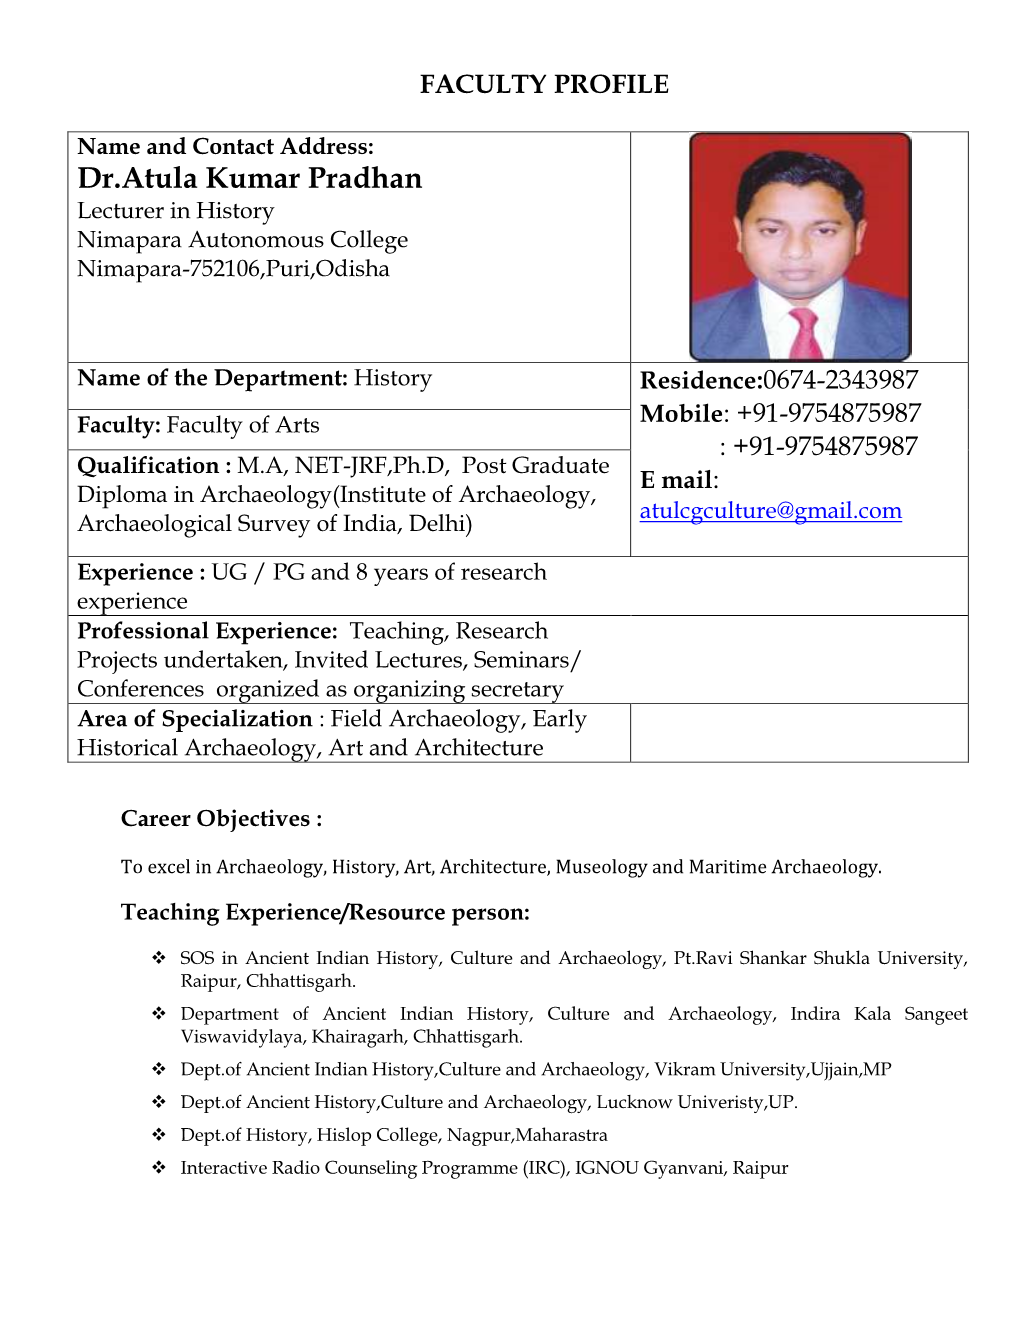 Dr.Atula Kumar Pradhan Lecturer in History Nimapara Autonomous College Nimapara-752106,Puri,Odisha